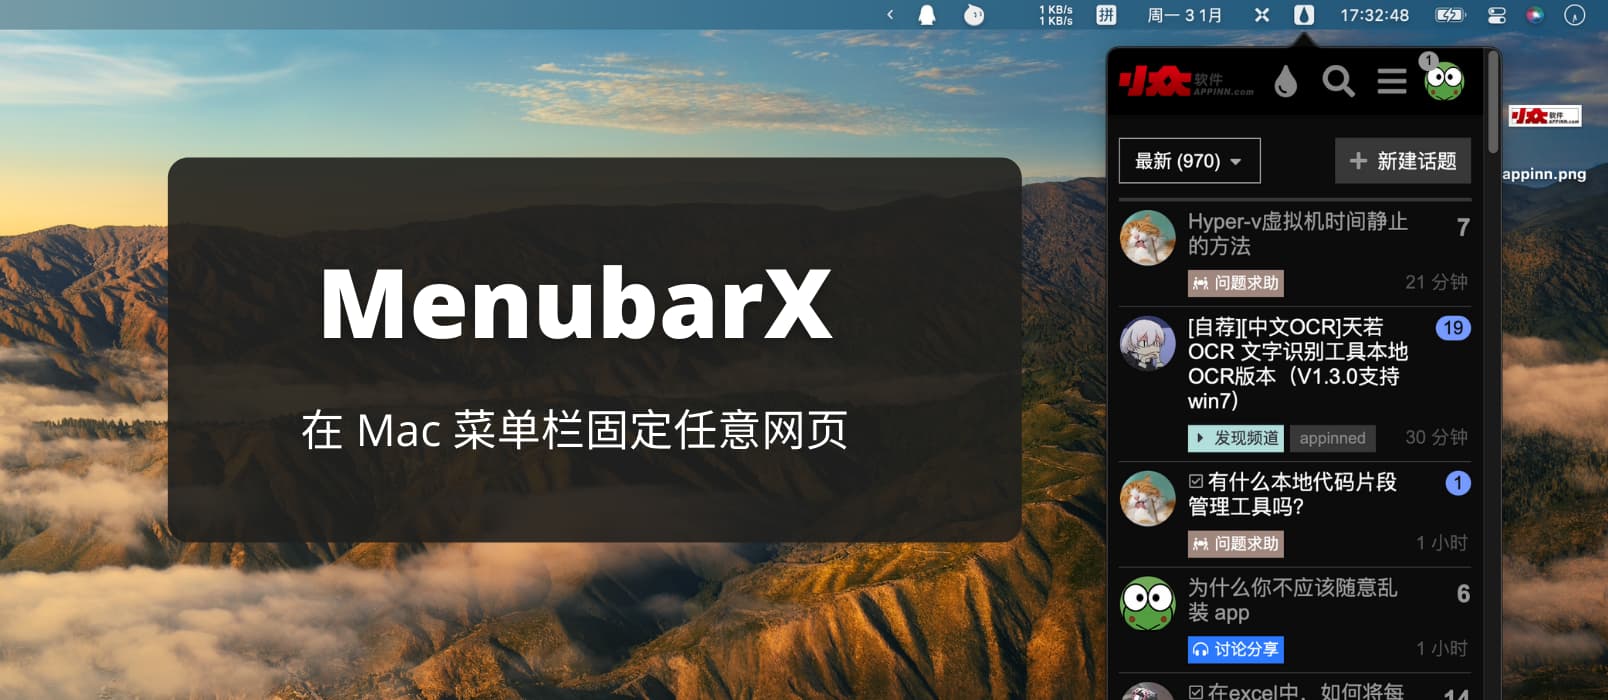 MenubarX - 在 Mac 菜单栏打开网页，就像原生 App 那样[macOS 限免]